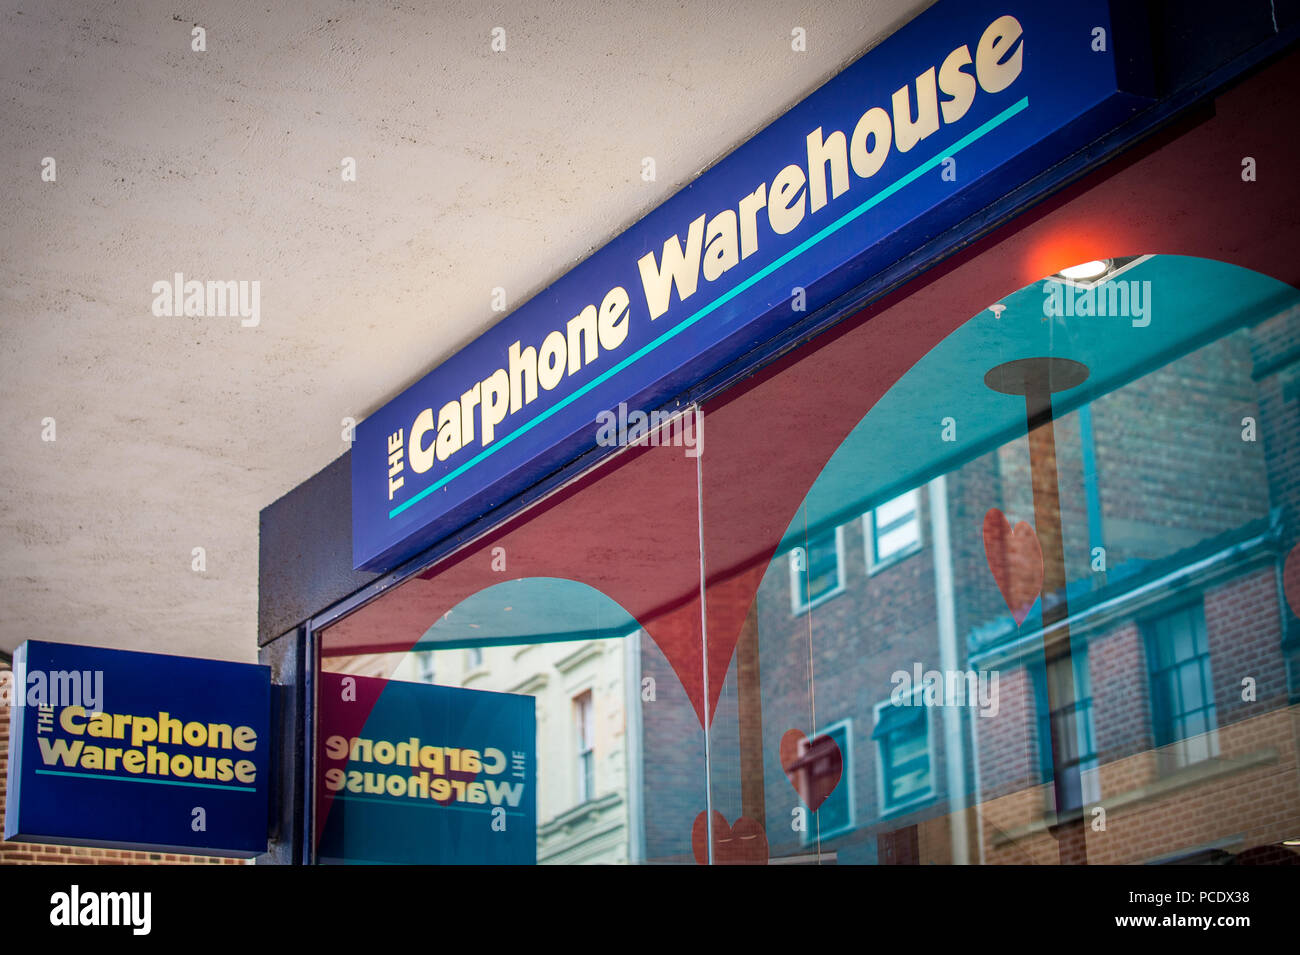 Carephone Warehouse Stock Photo